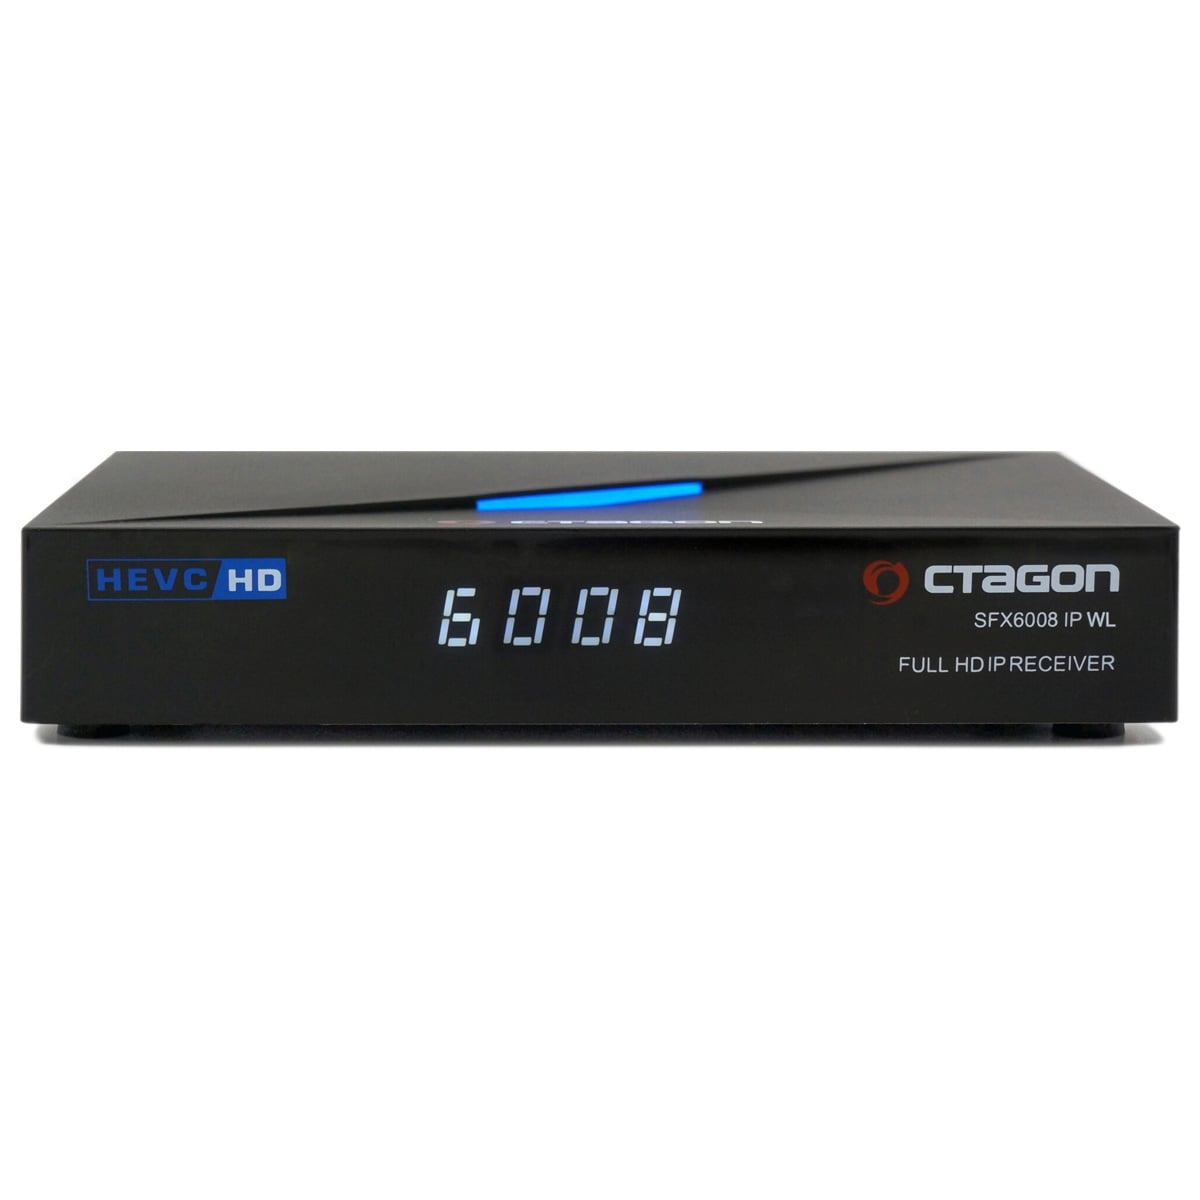 OCTAGON SFX6008 IP WL MB 512